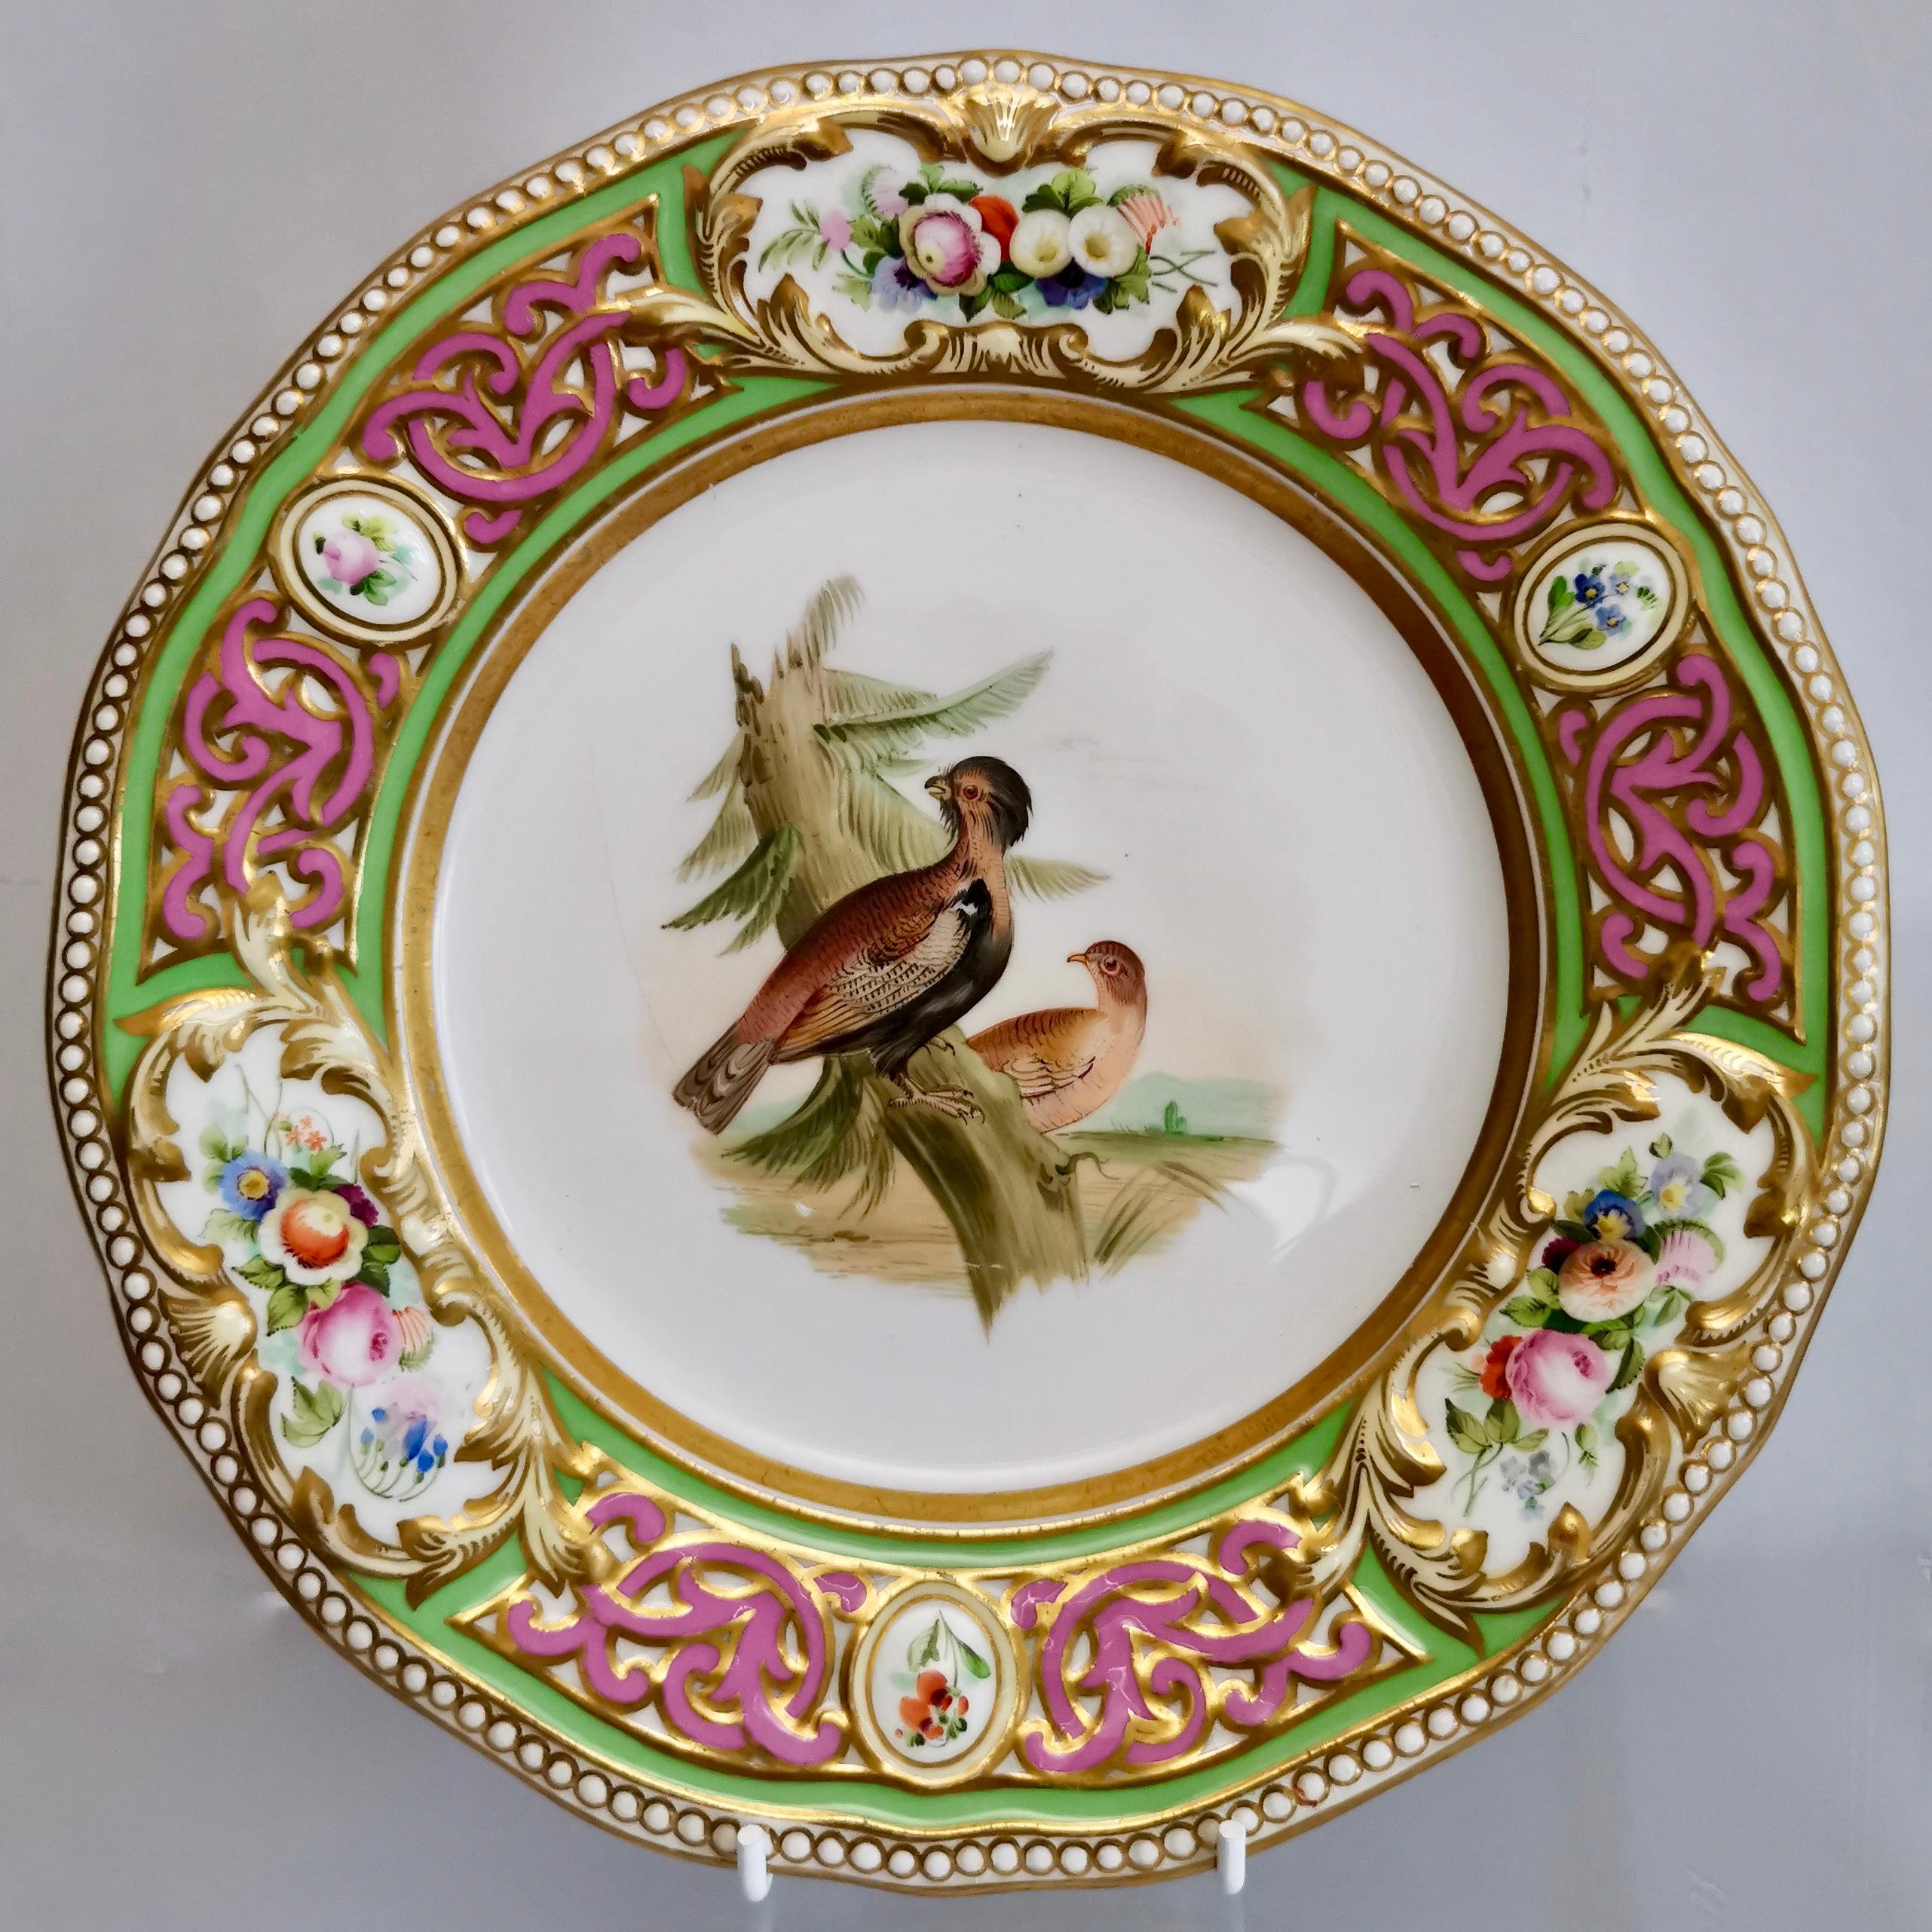 Grainger Worcester Porcelain Dessert Service, Persian Revival with Birds, 1855 6